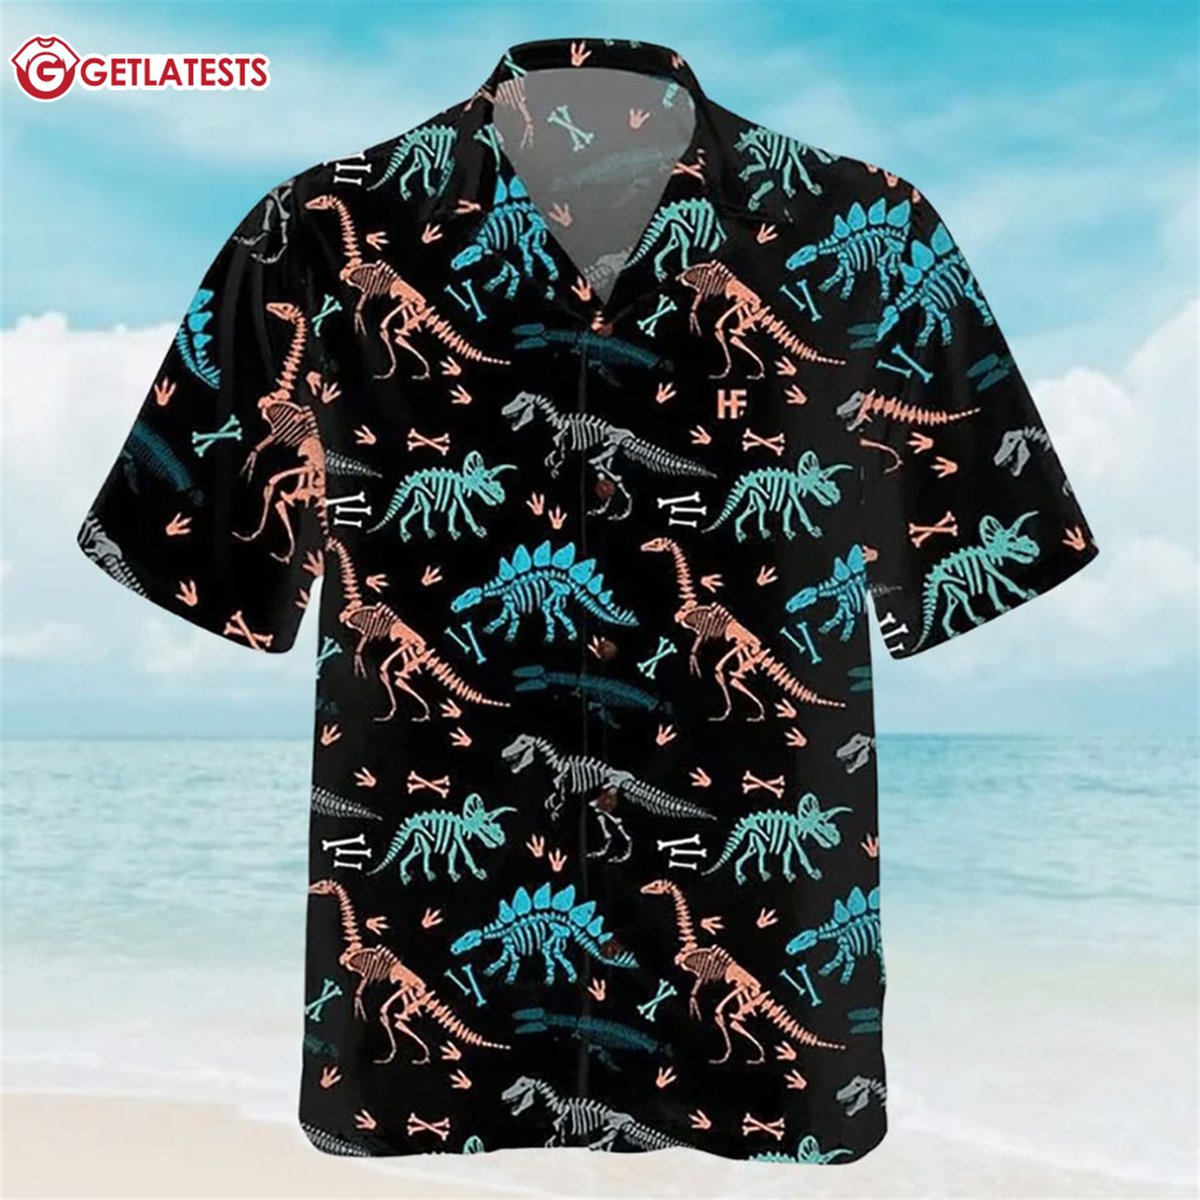 Dinosaur Skeleton Seamless Grunge Pattern Hawaiian Shirt #Dinosaur #HawaiianShirt #getlatests getlatests.com/product/dinosa…